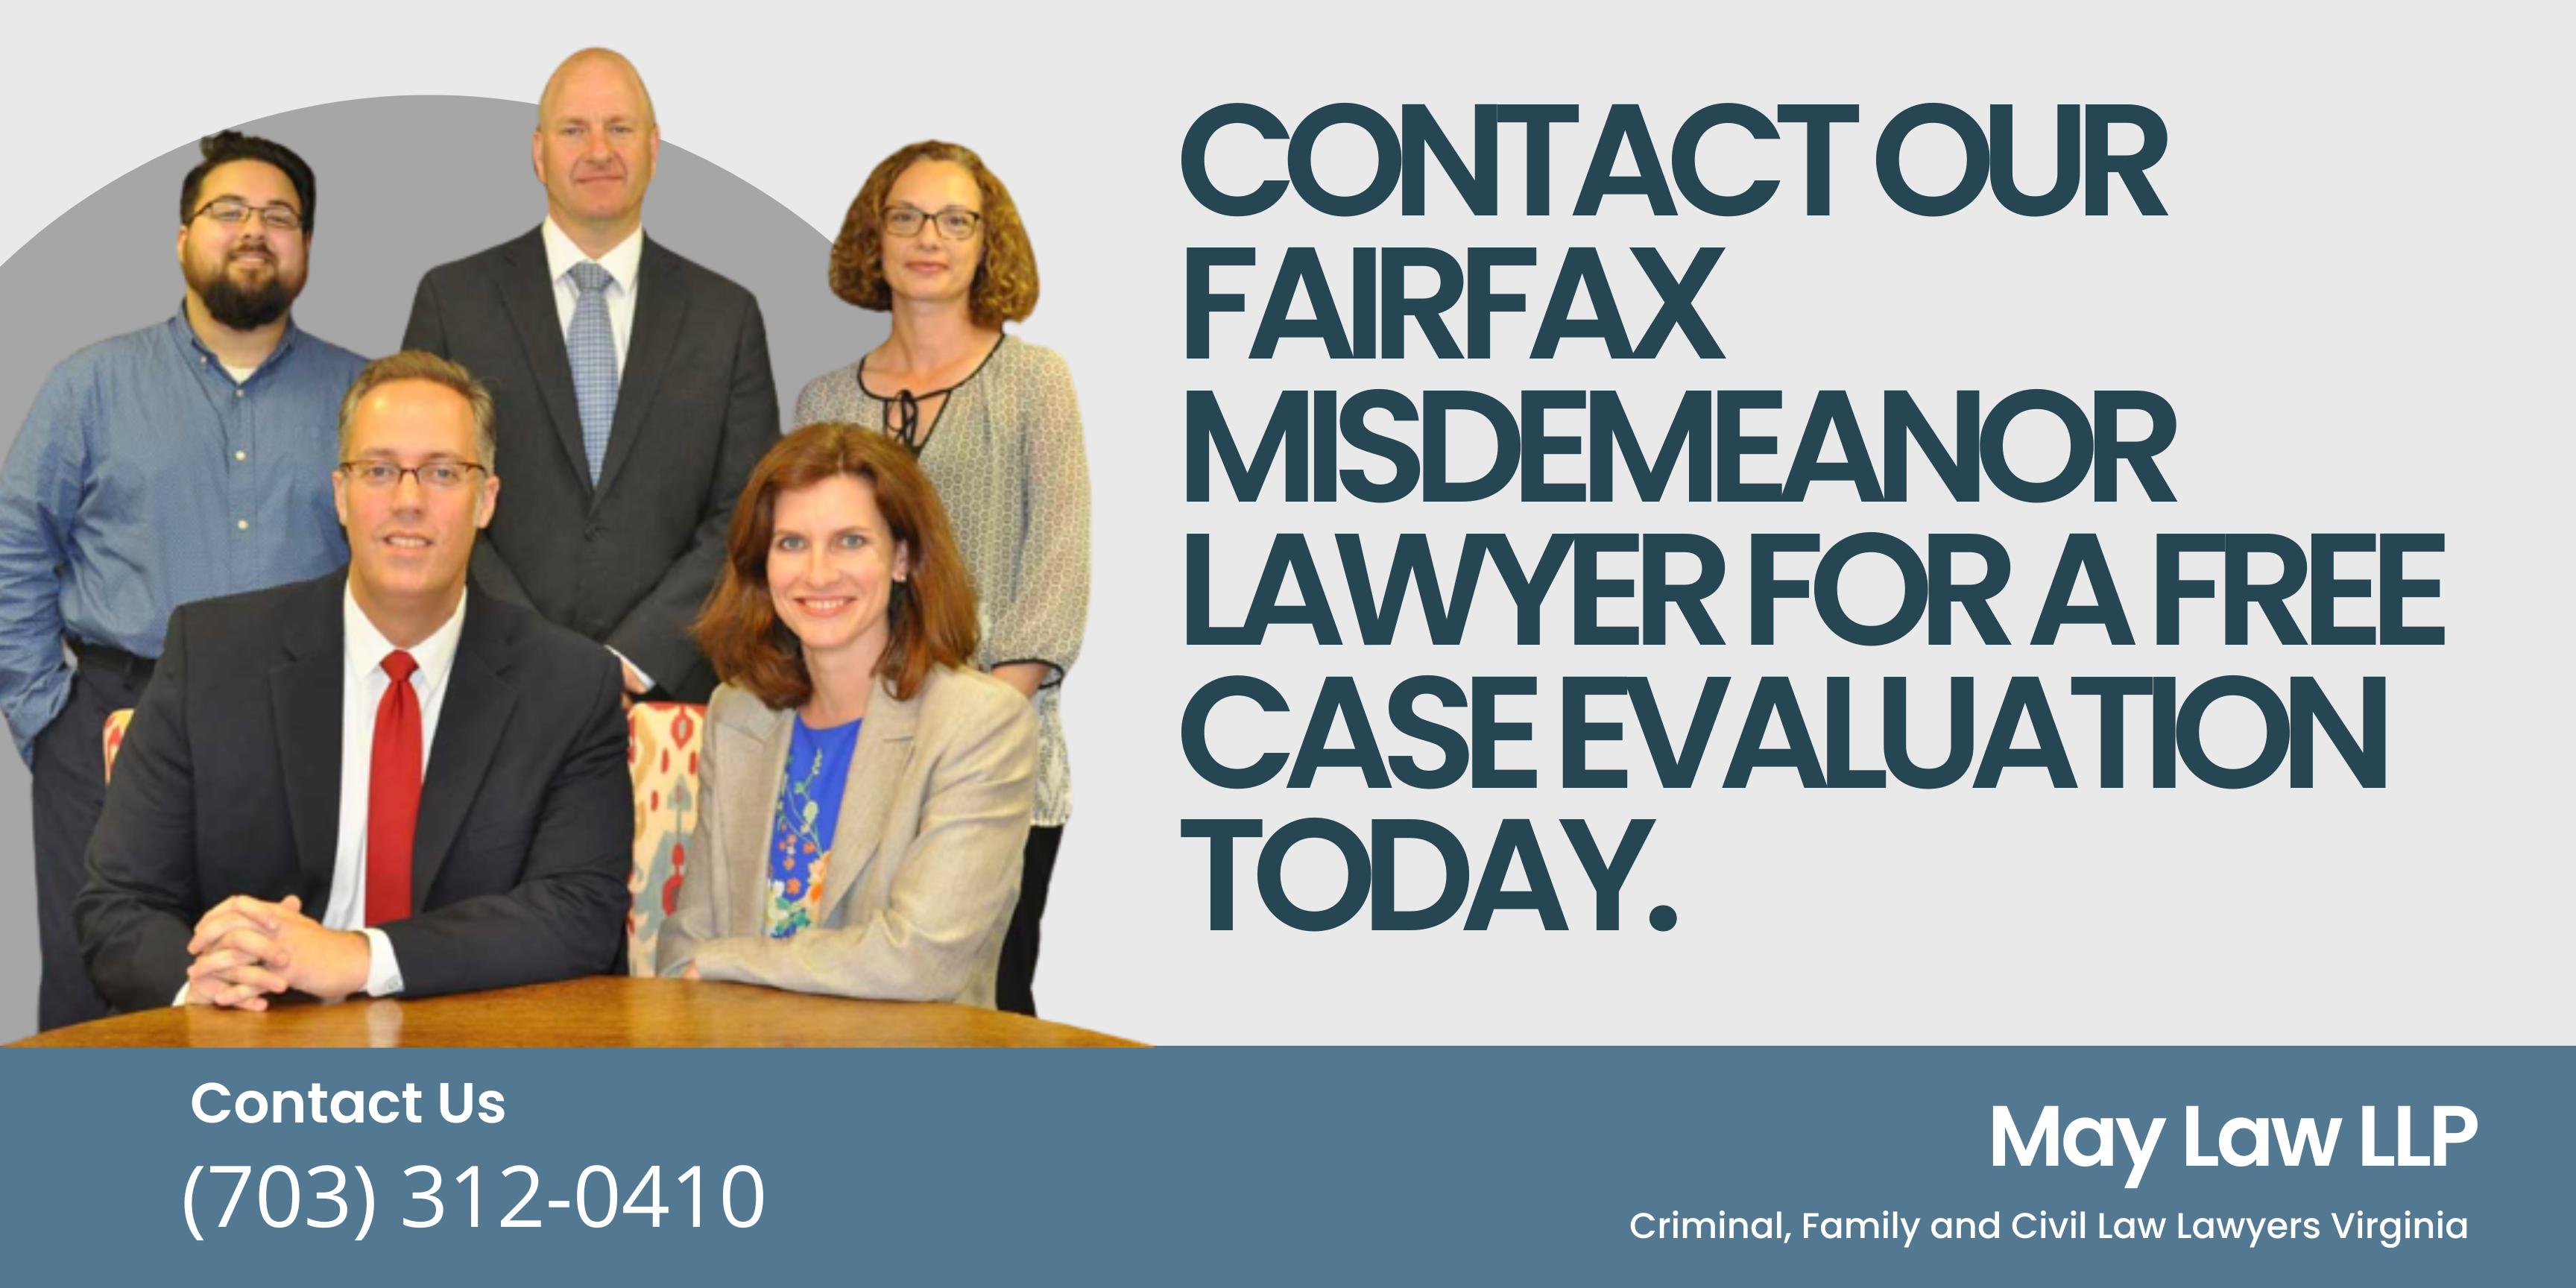 Contact Our Fairfax Misdemeanor Lawyer